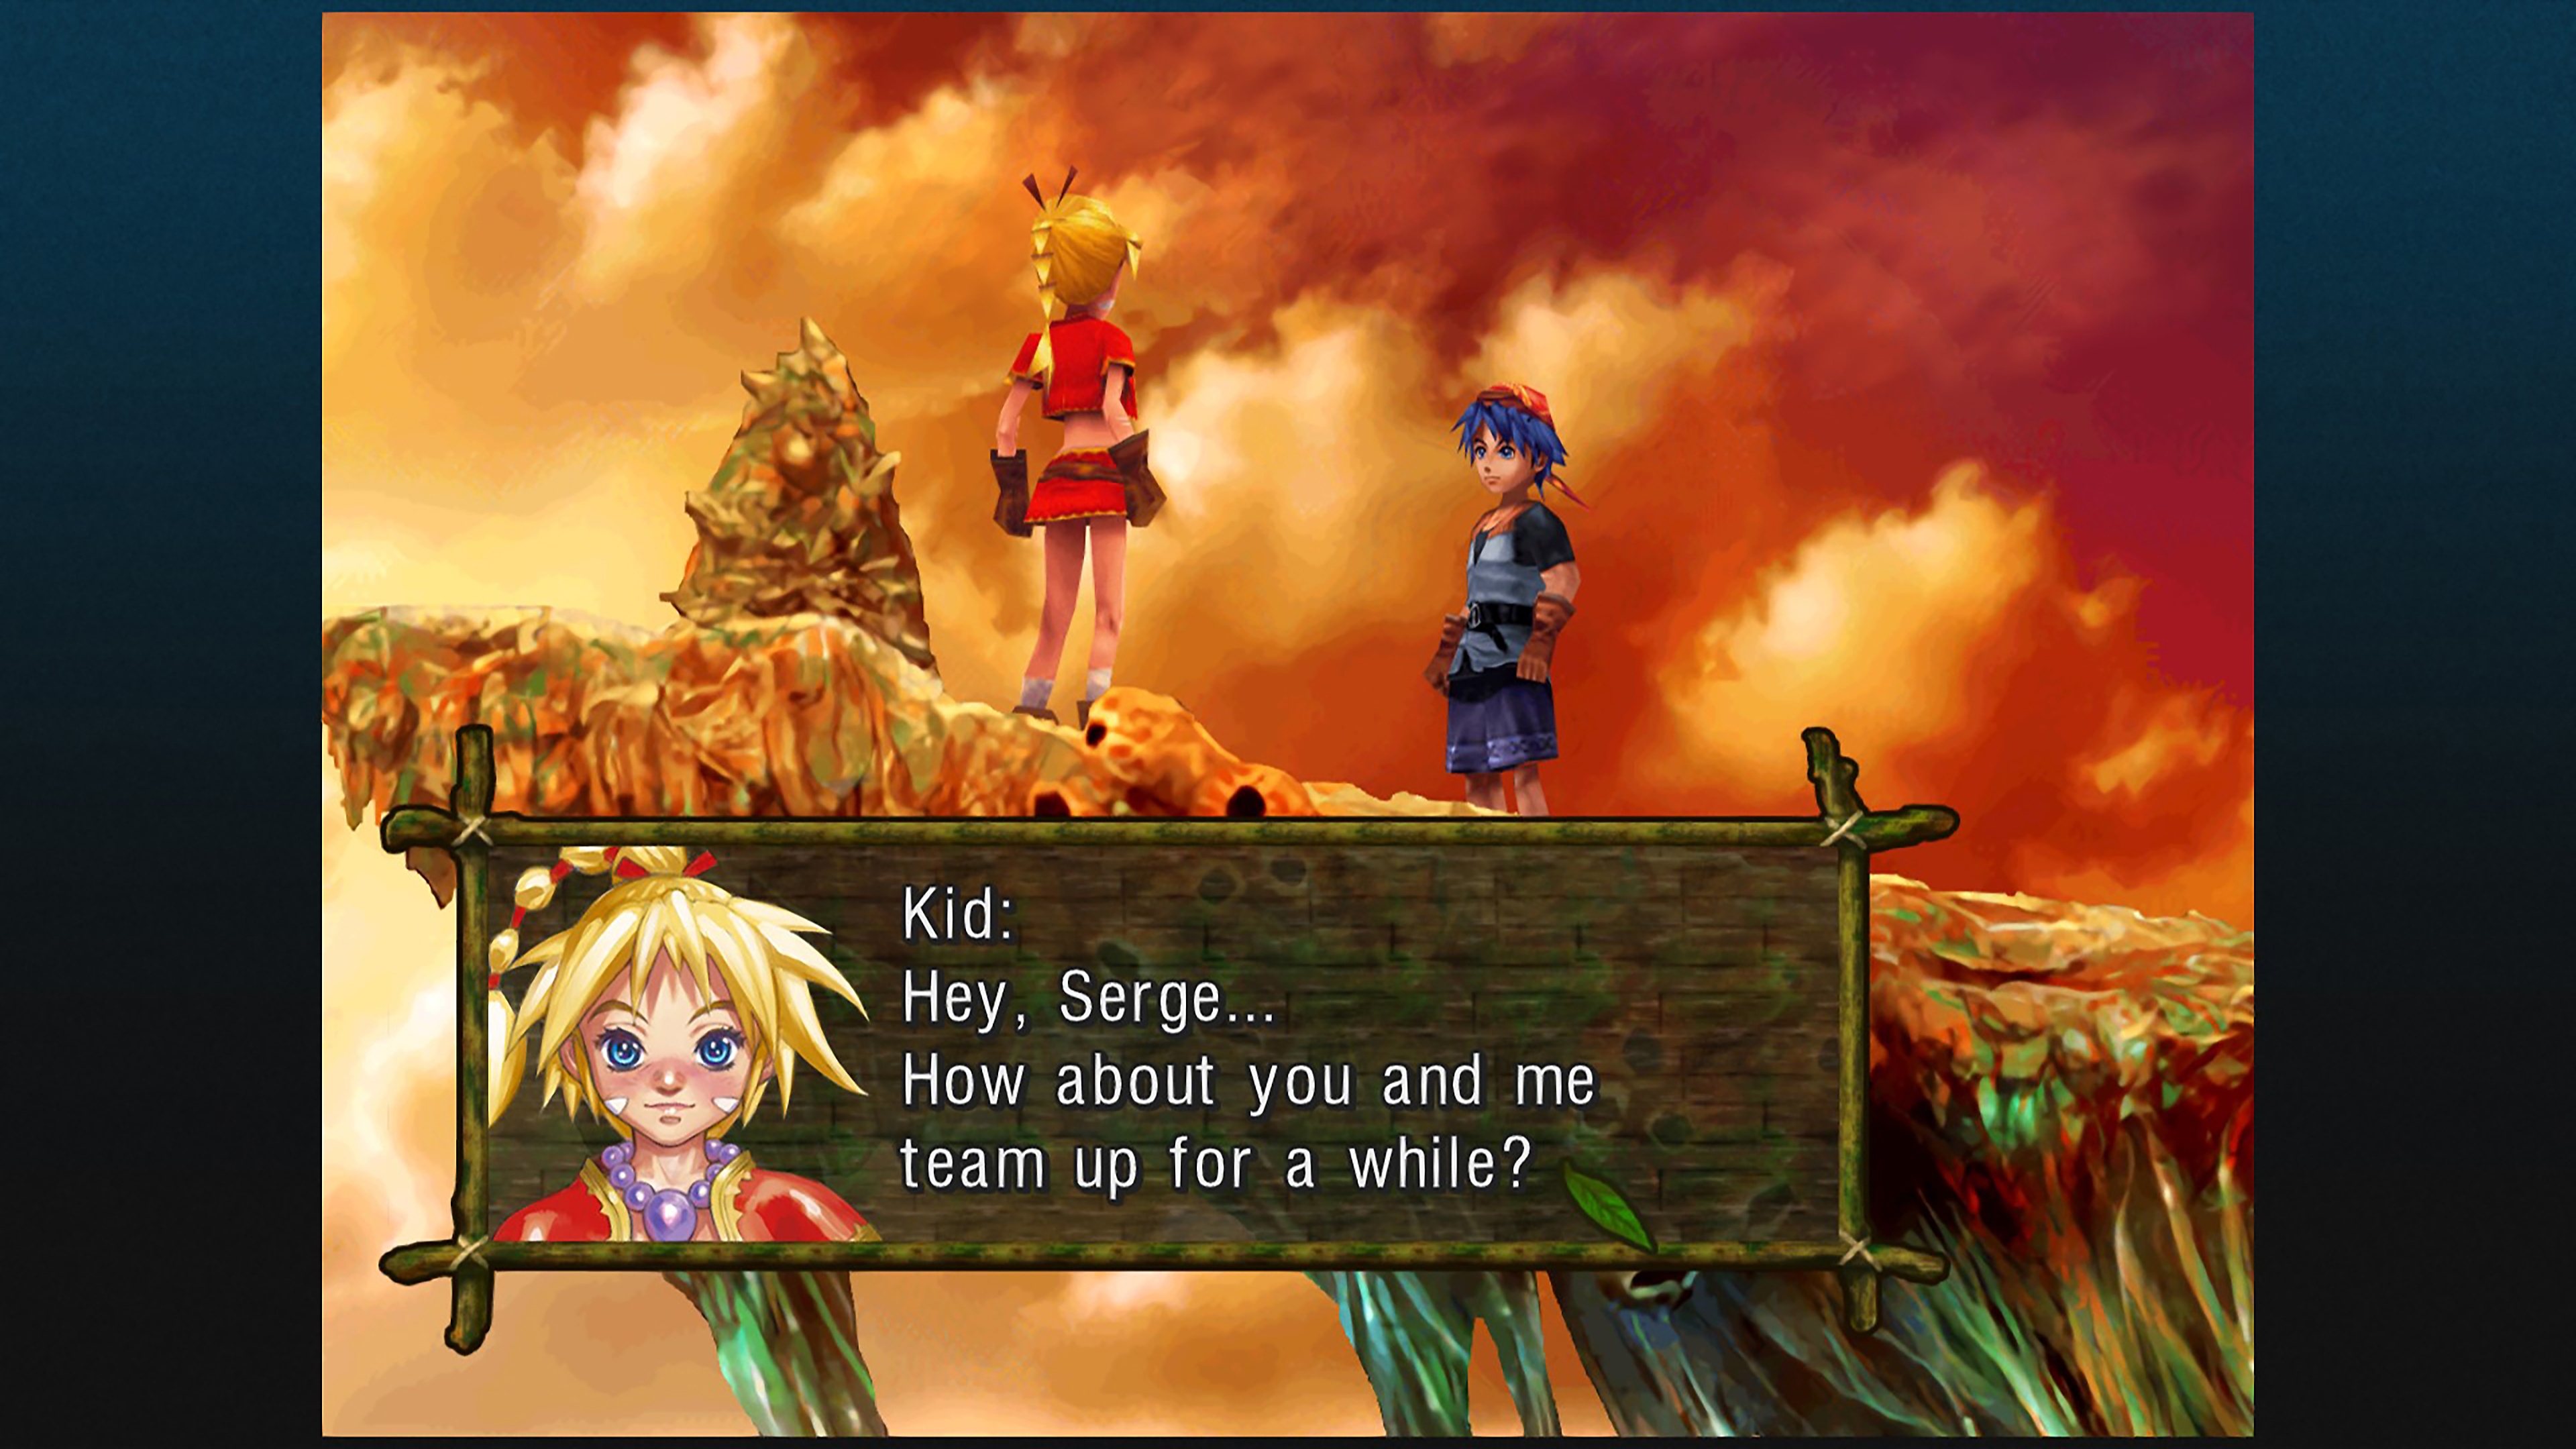 《Chrono Cross:The Radical Dreamers Edition》螢幕截圖，顯示兩個角色站在懸崖邊對話